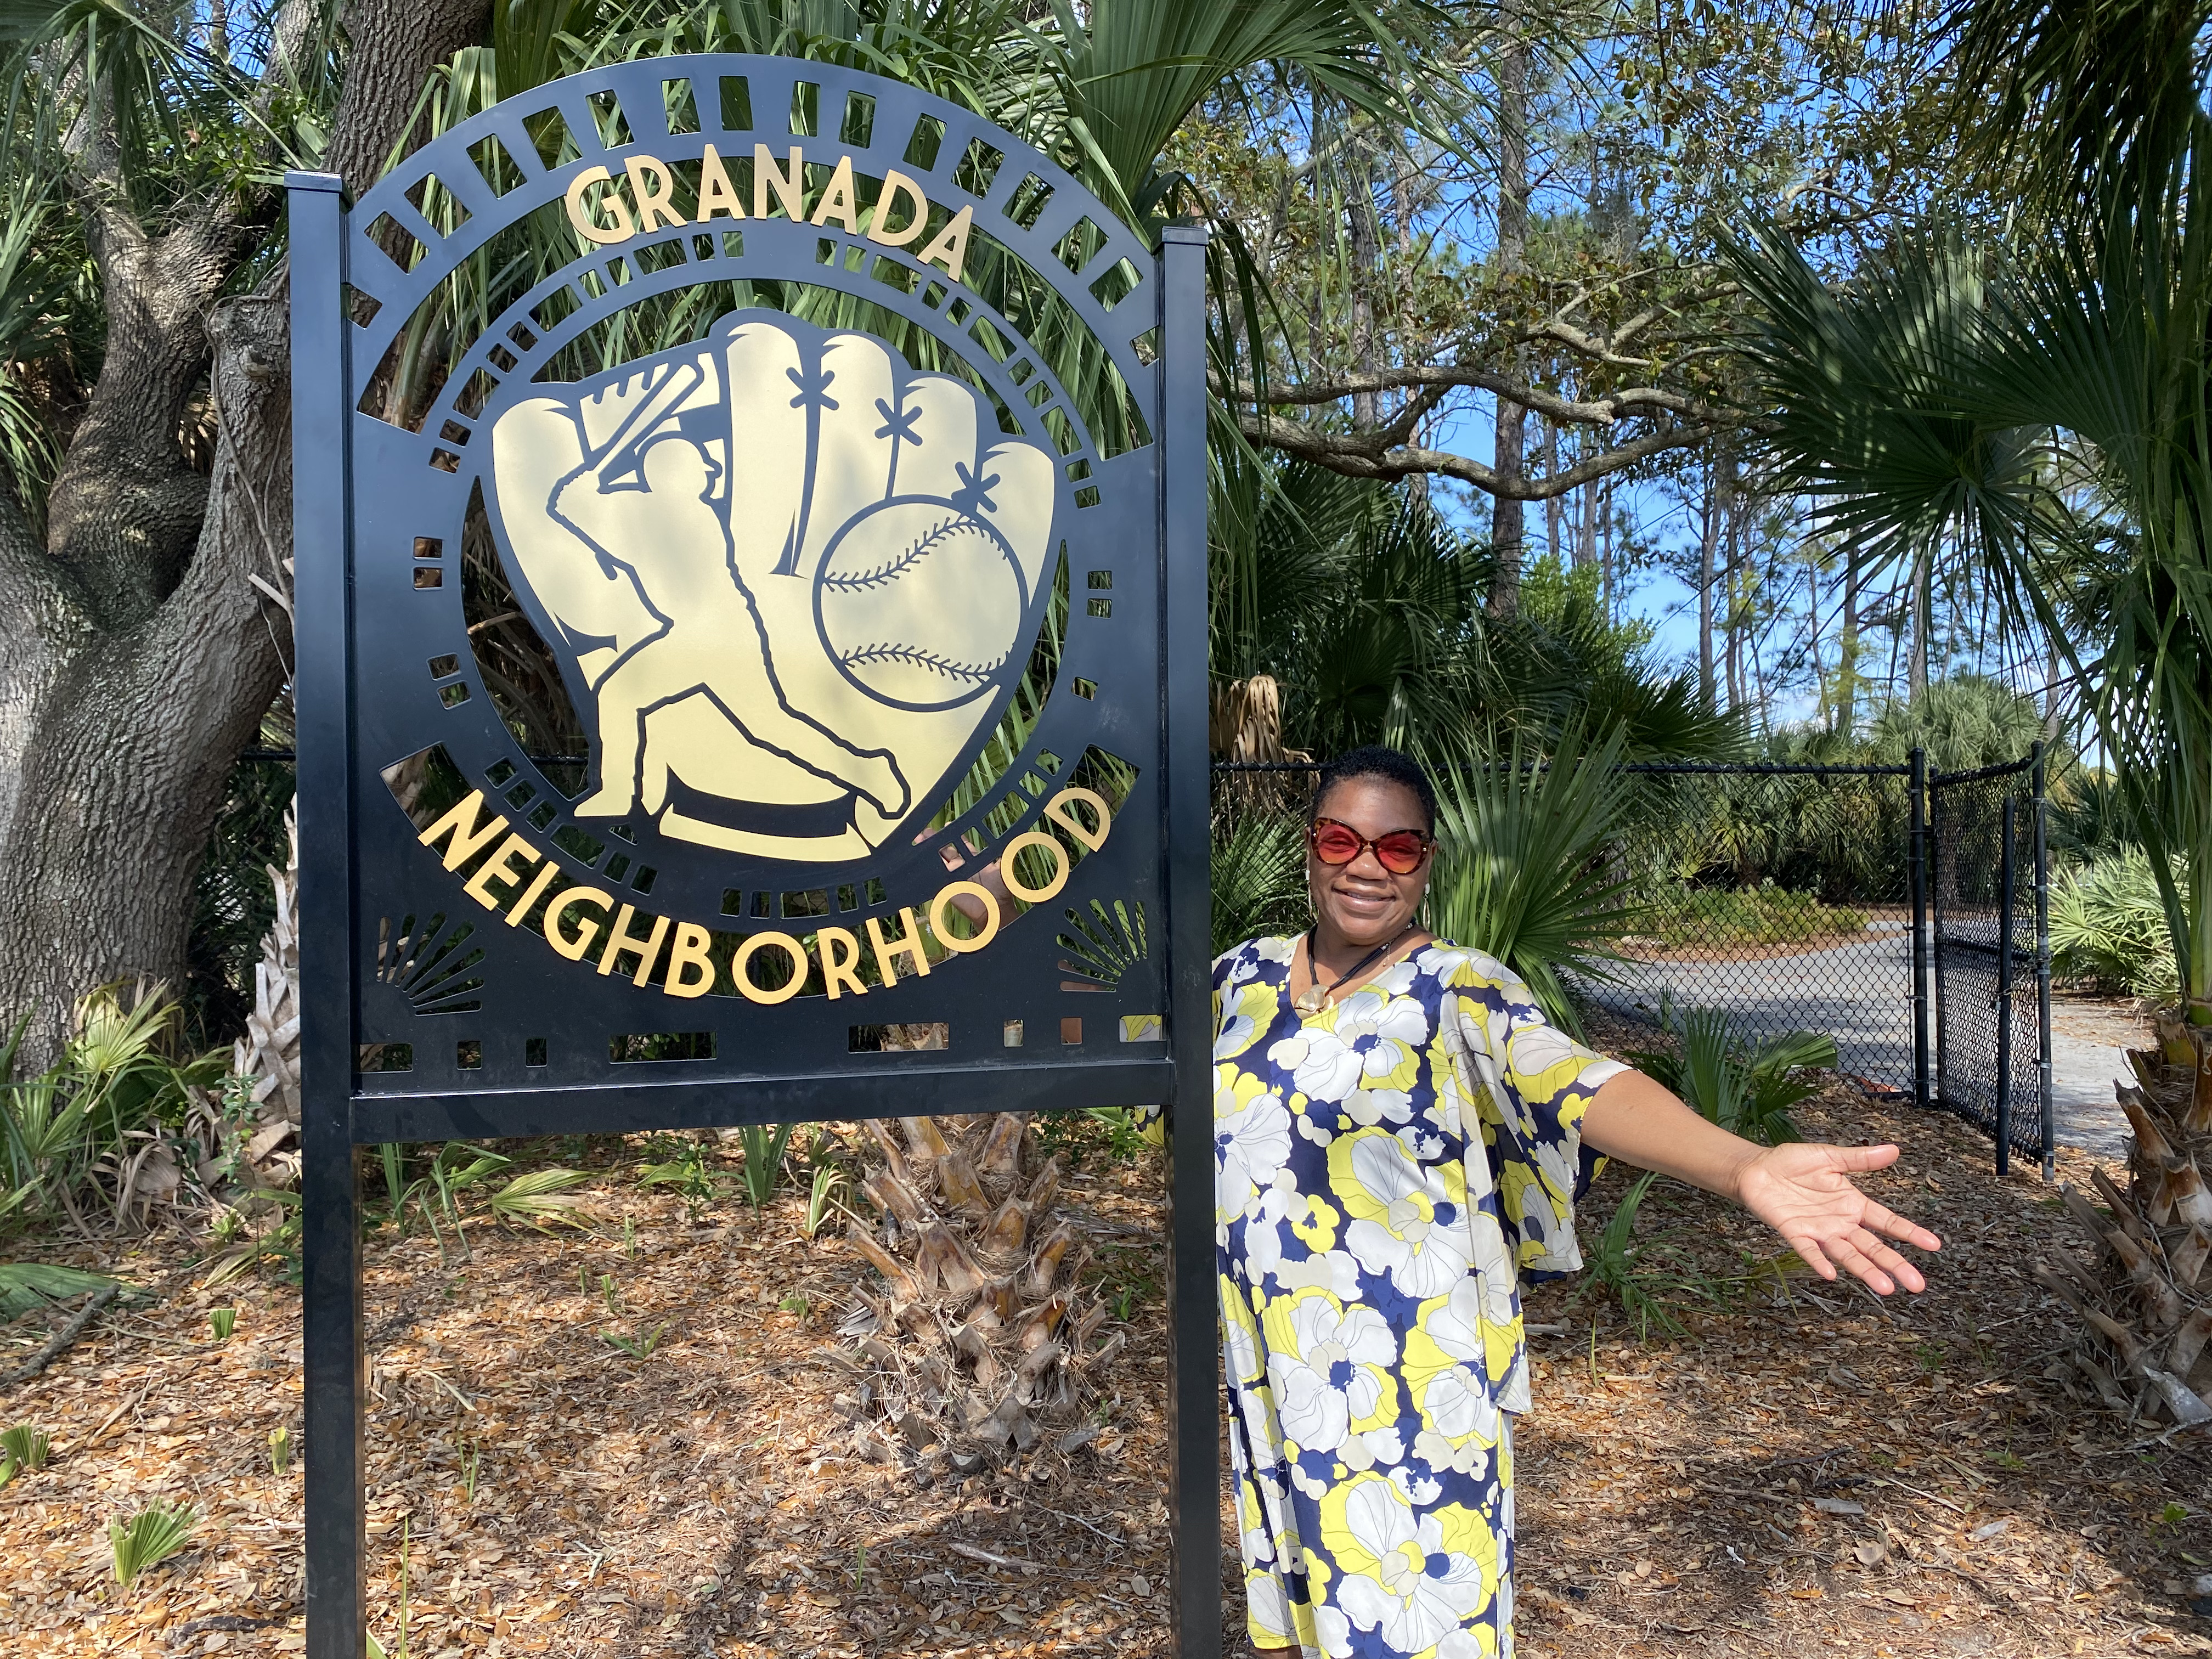 Neighborhood leader, Lynne Simpkins, stands with the Granada Neighborhood sign.